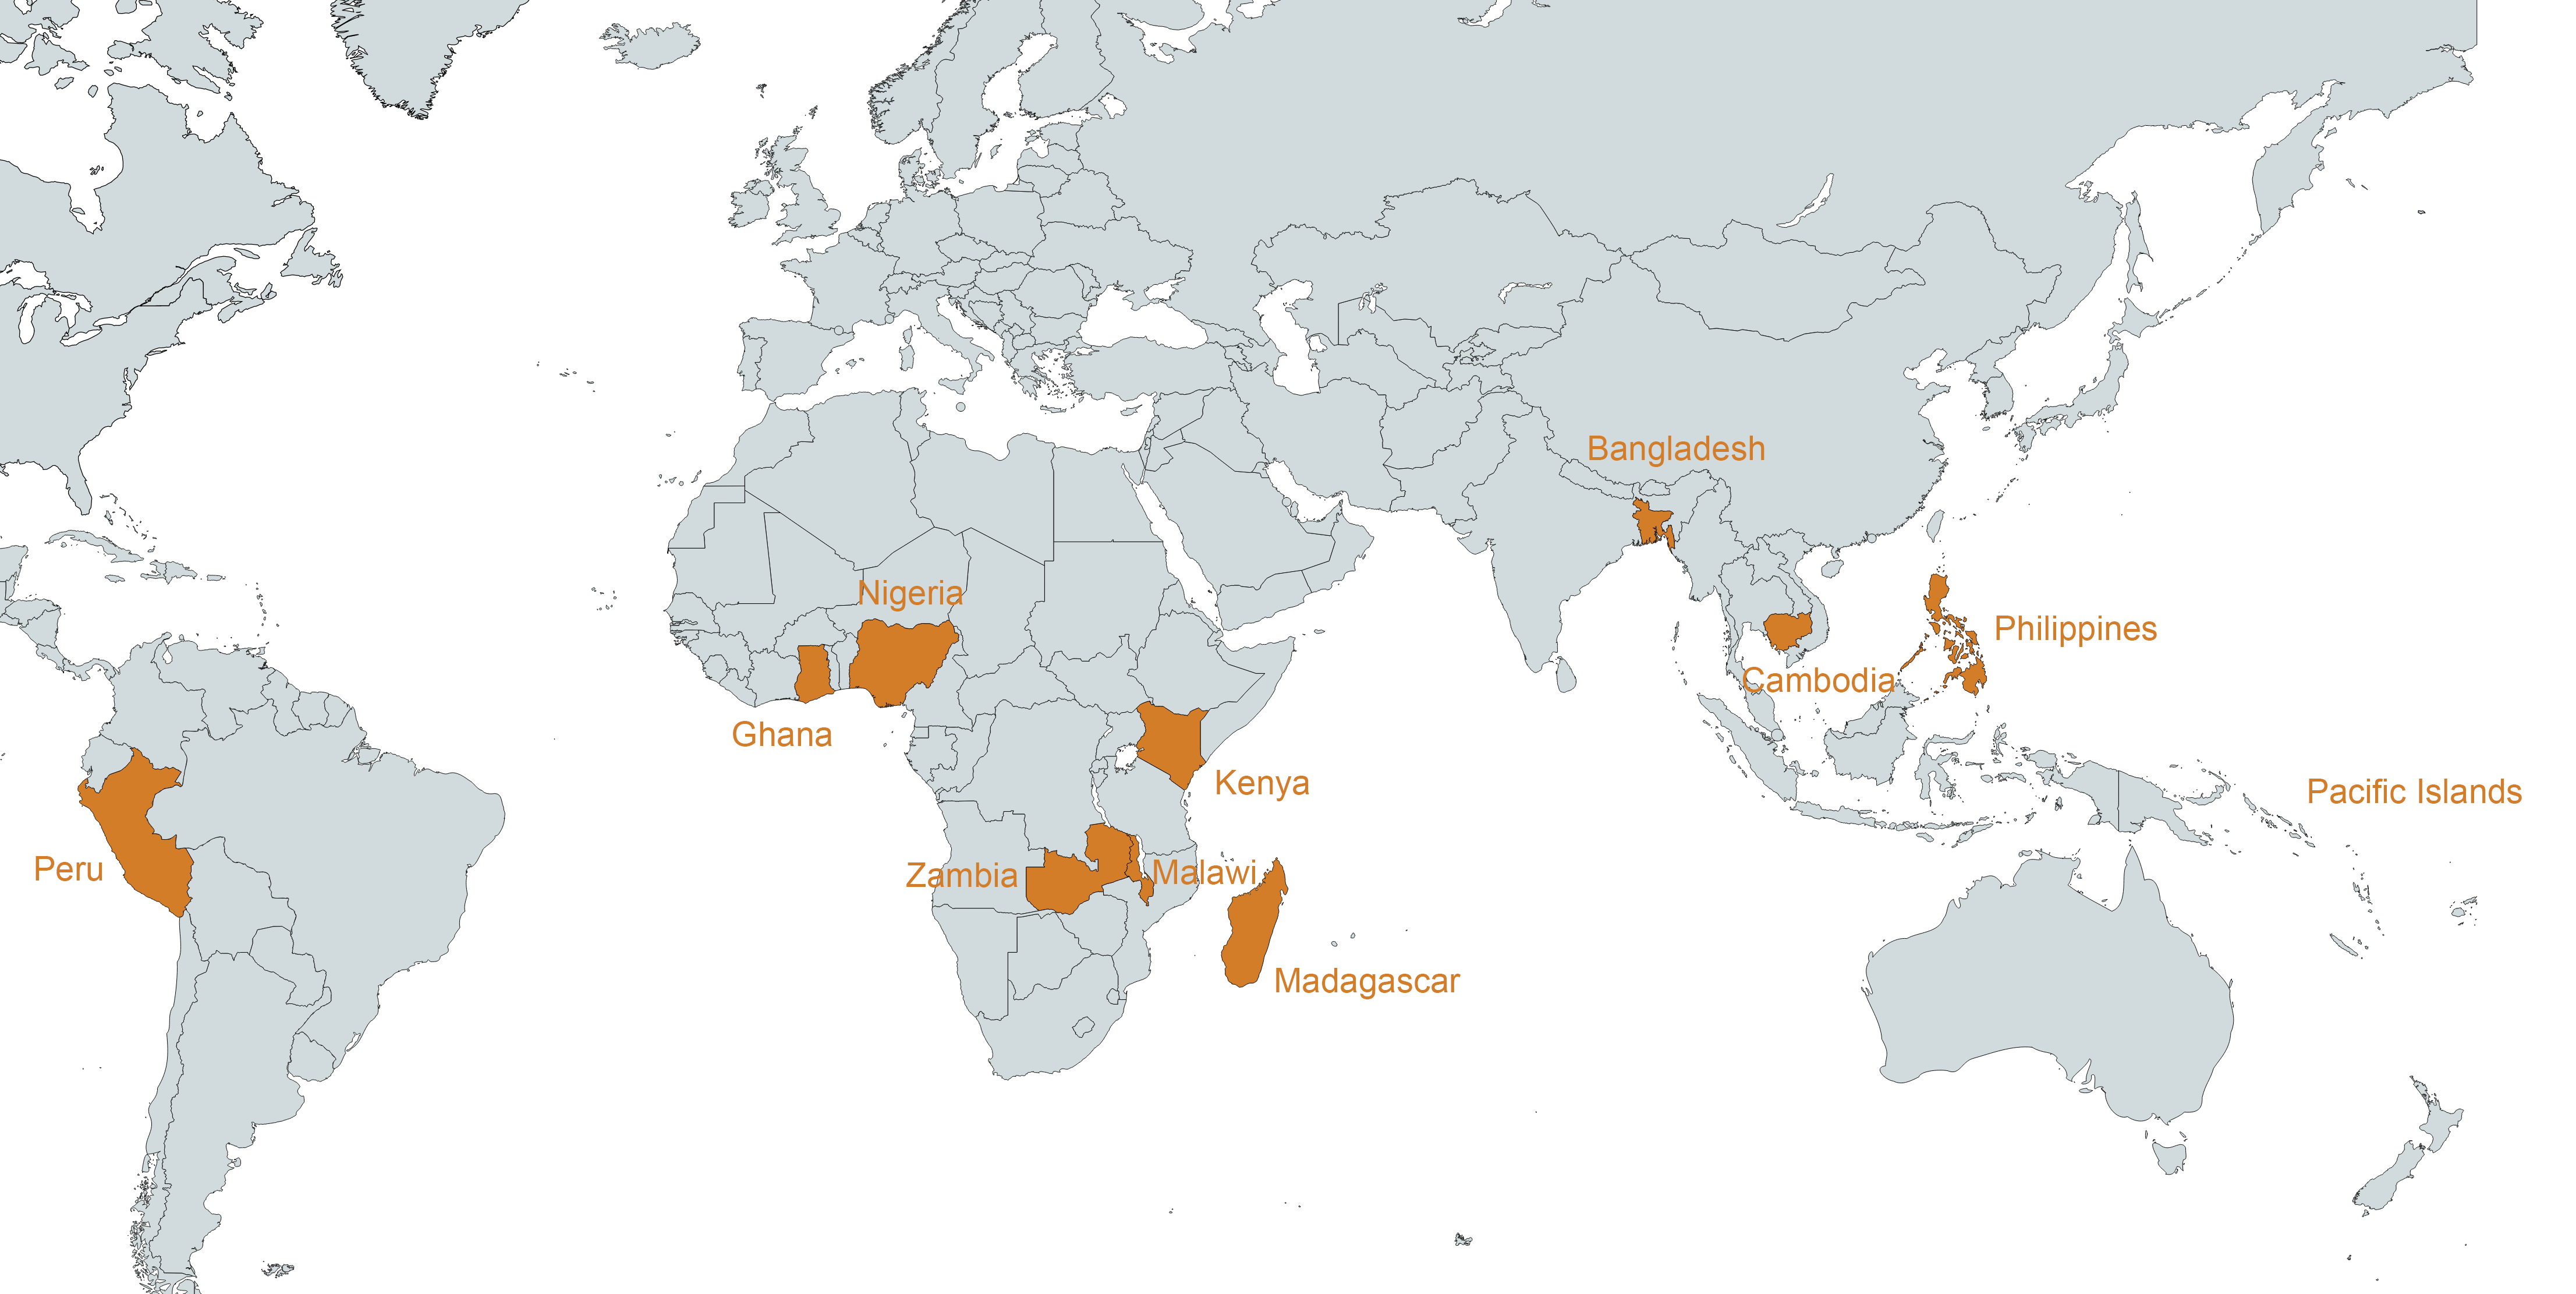 World map with the following countries highlighted in orange: Peru, Ghana, Nigeria, Zambia, Malawi, Madagascar, Kenya, Bangladesh, Cambodia, Philippines